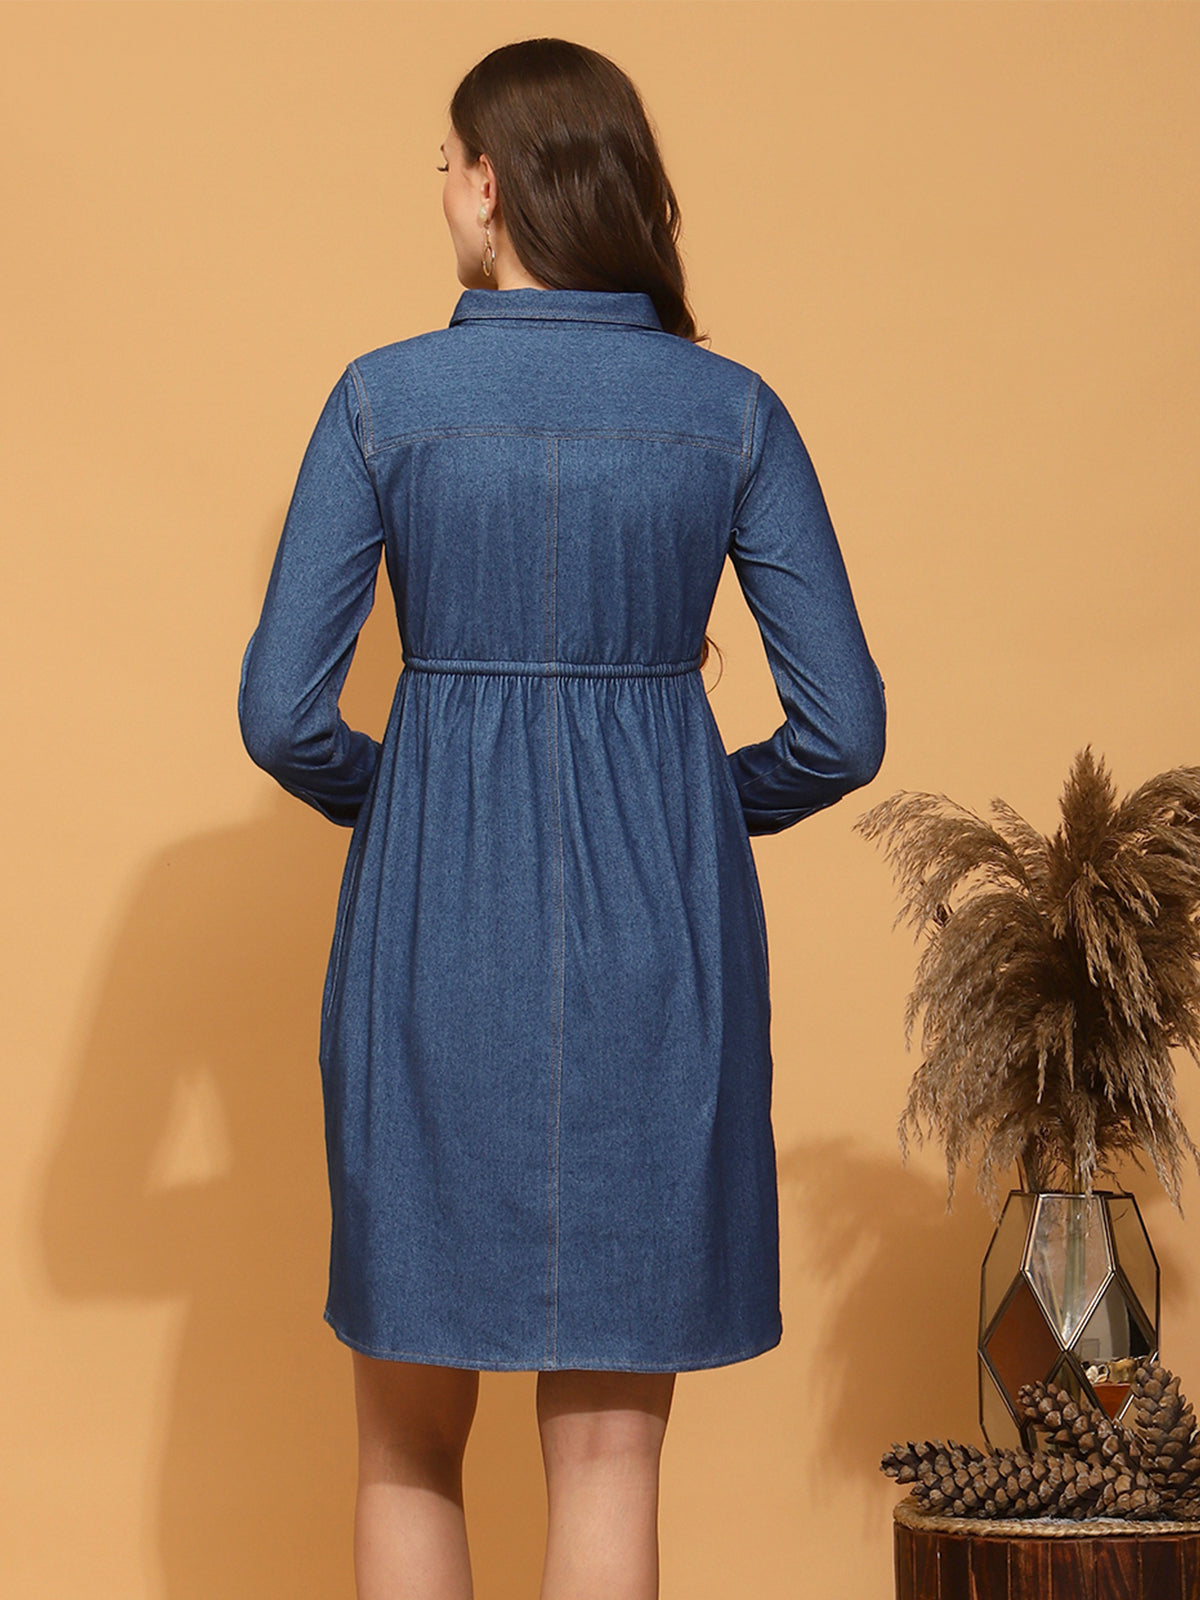 Hazel Shirt Dress - Chambray Denim Blue (by Electric Rose) | OCN Culture